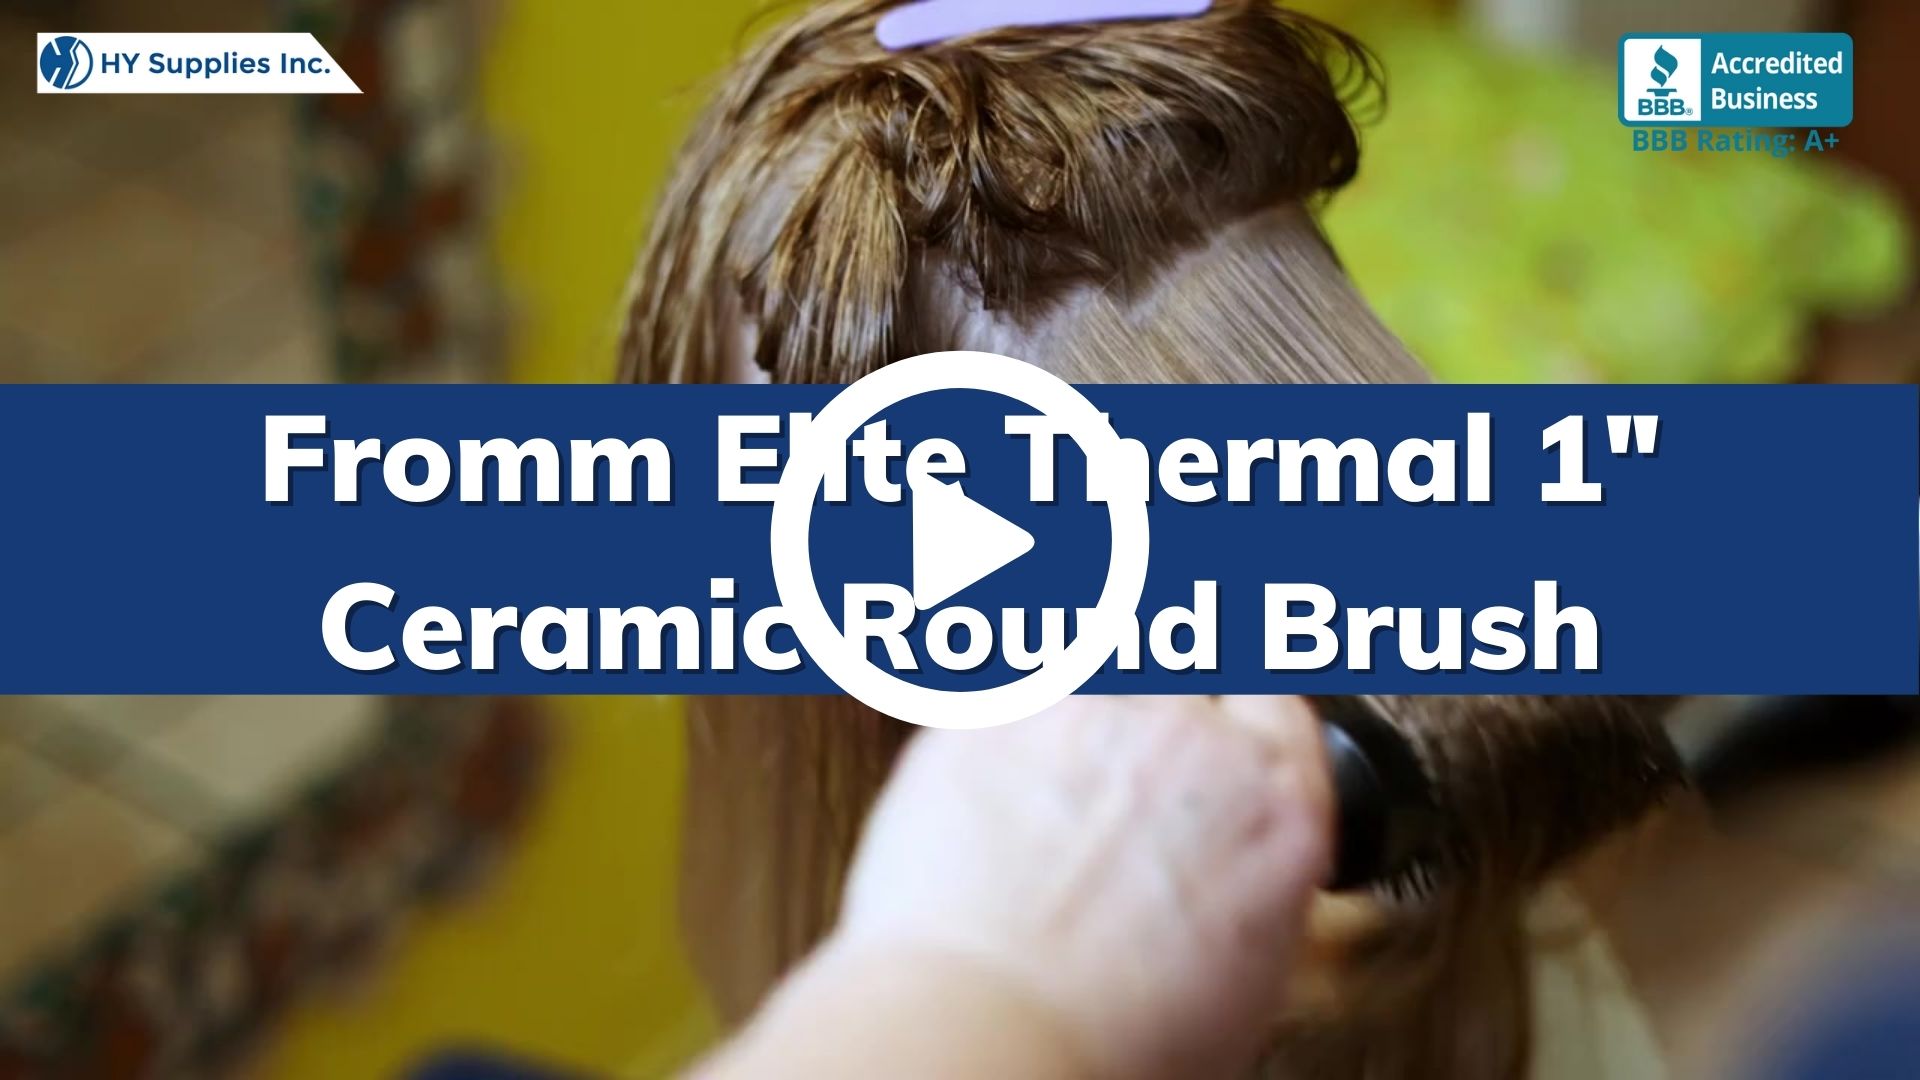 Fromm Elite Thermal 1"" Ceramic Round Brush